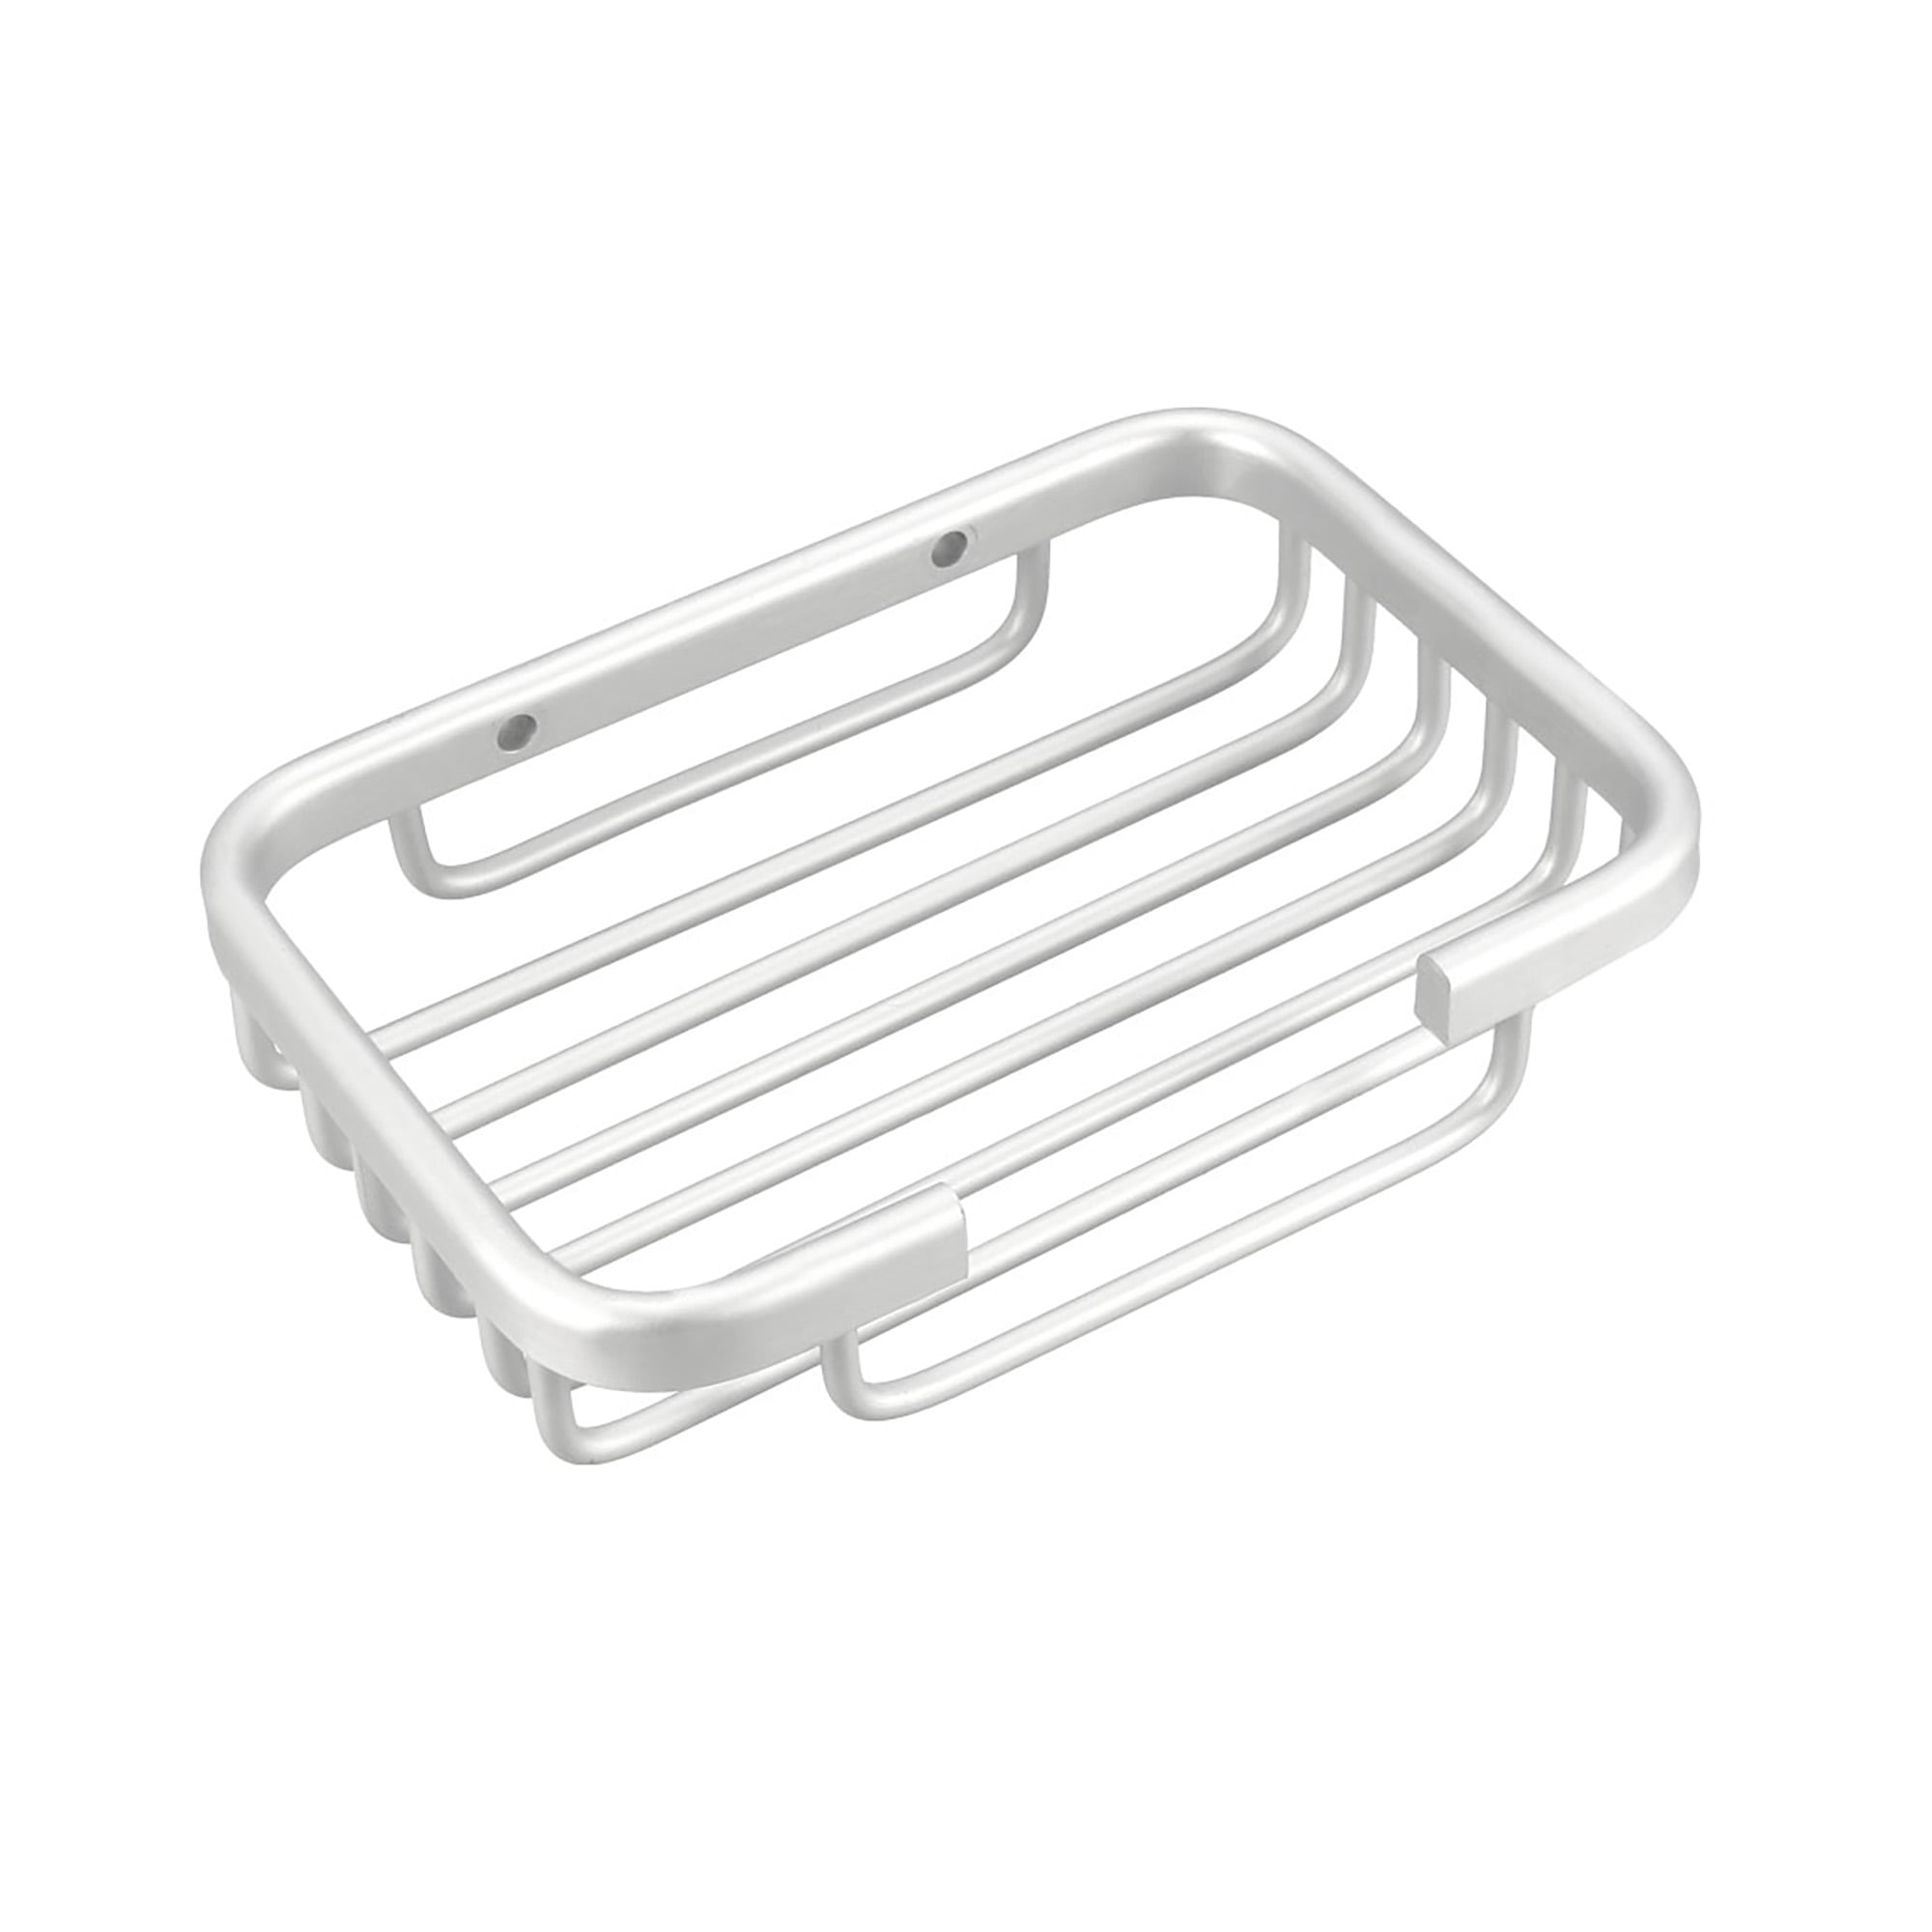 Soap Dish Holder Saver Aluminum Wall Mounted Tray with Installation Kits Silver 